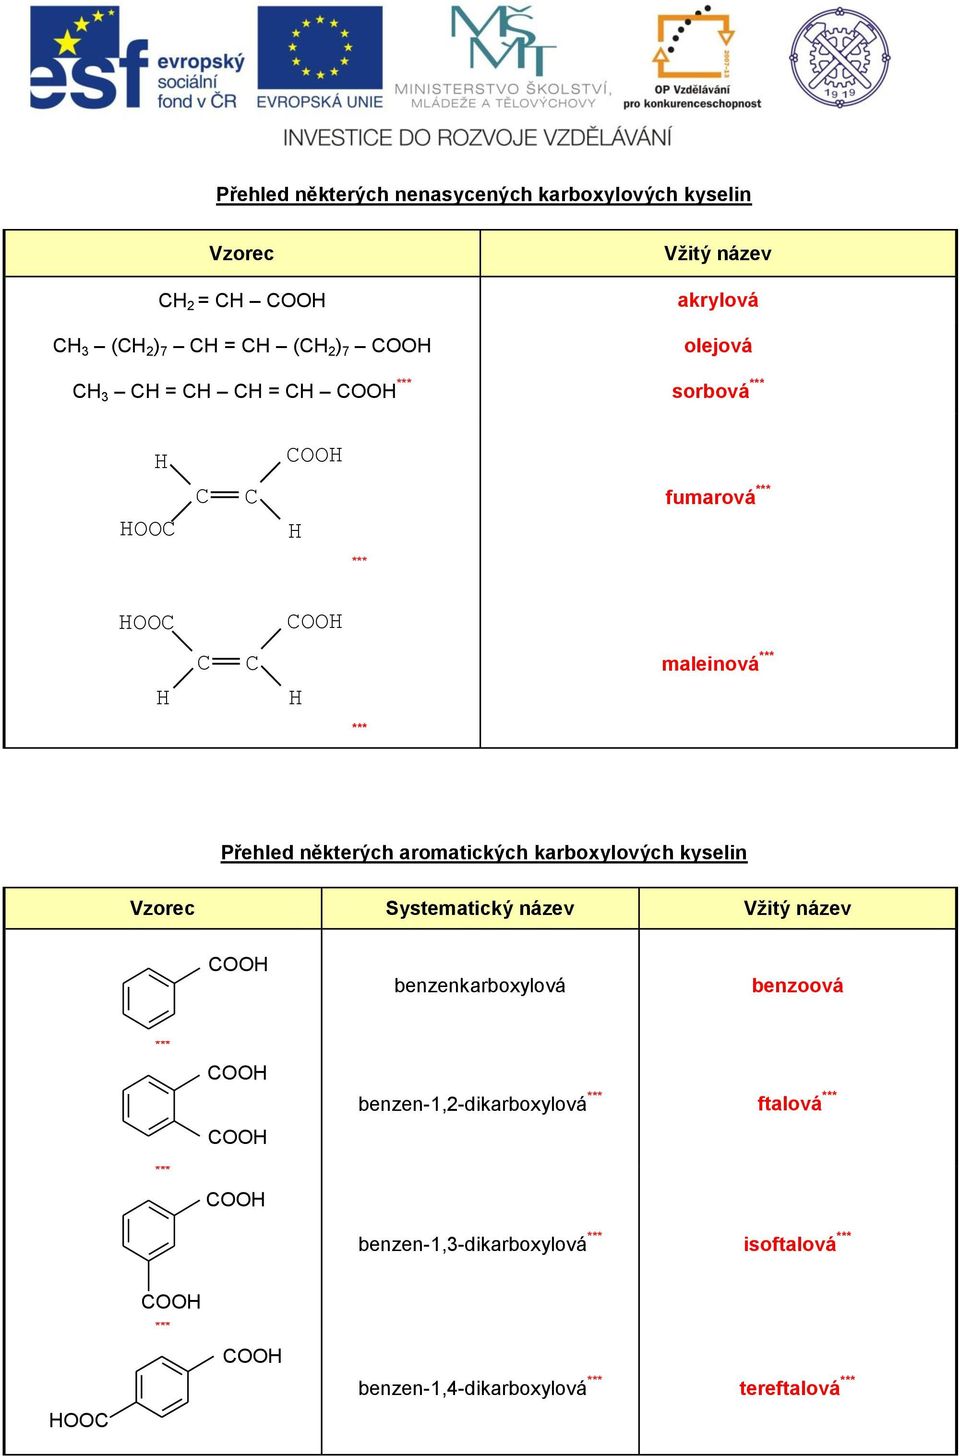 karboxylových kyselin Vzorec Systematický název Vžitý název benzenkarboxylová benzoová ***